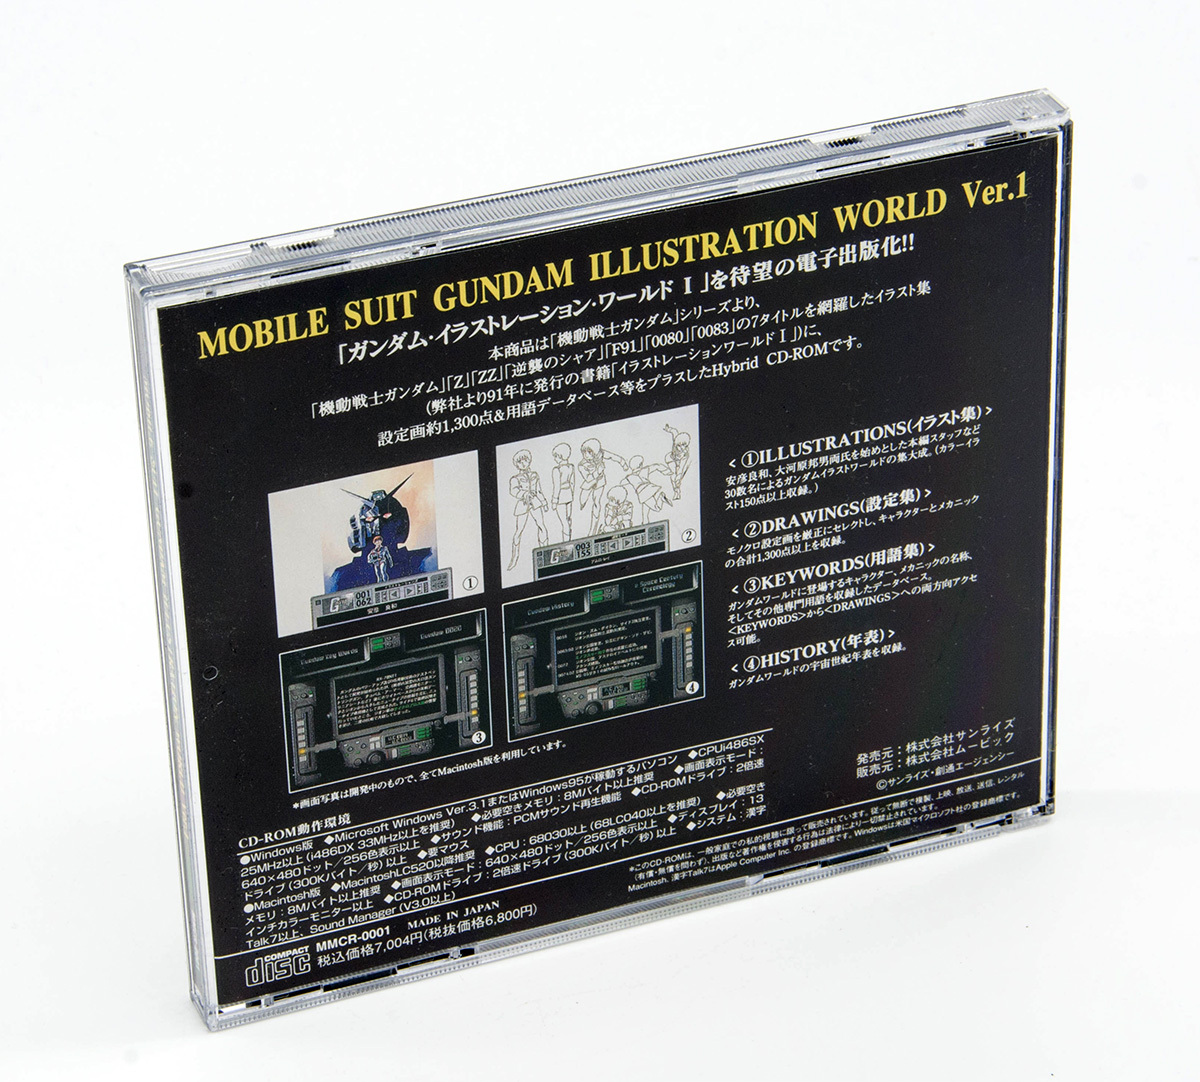 MOBILE SUIT GUNDAM ILLUSTRATION WORLD VER.1 ガンダム・イラストレーション・ワールドI Windows Macintosh CD-ROM 中古_画像4